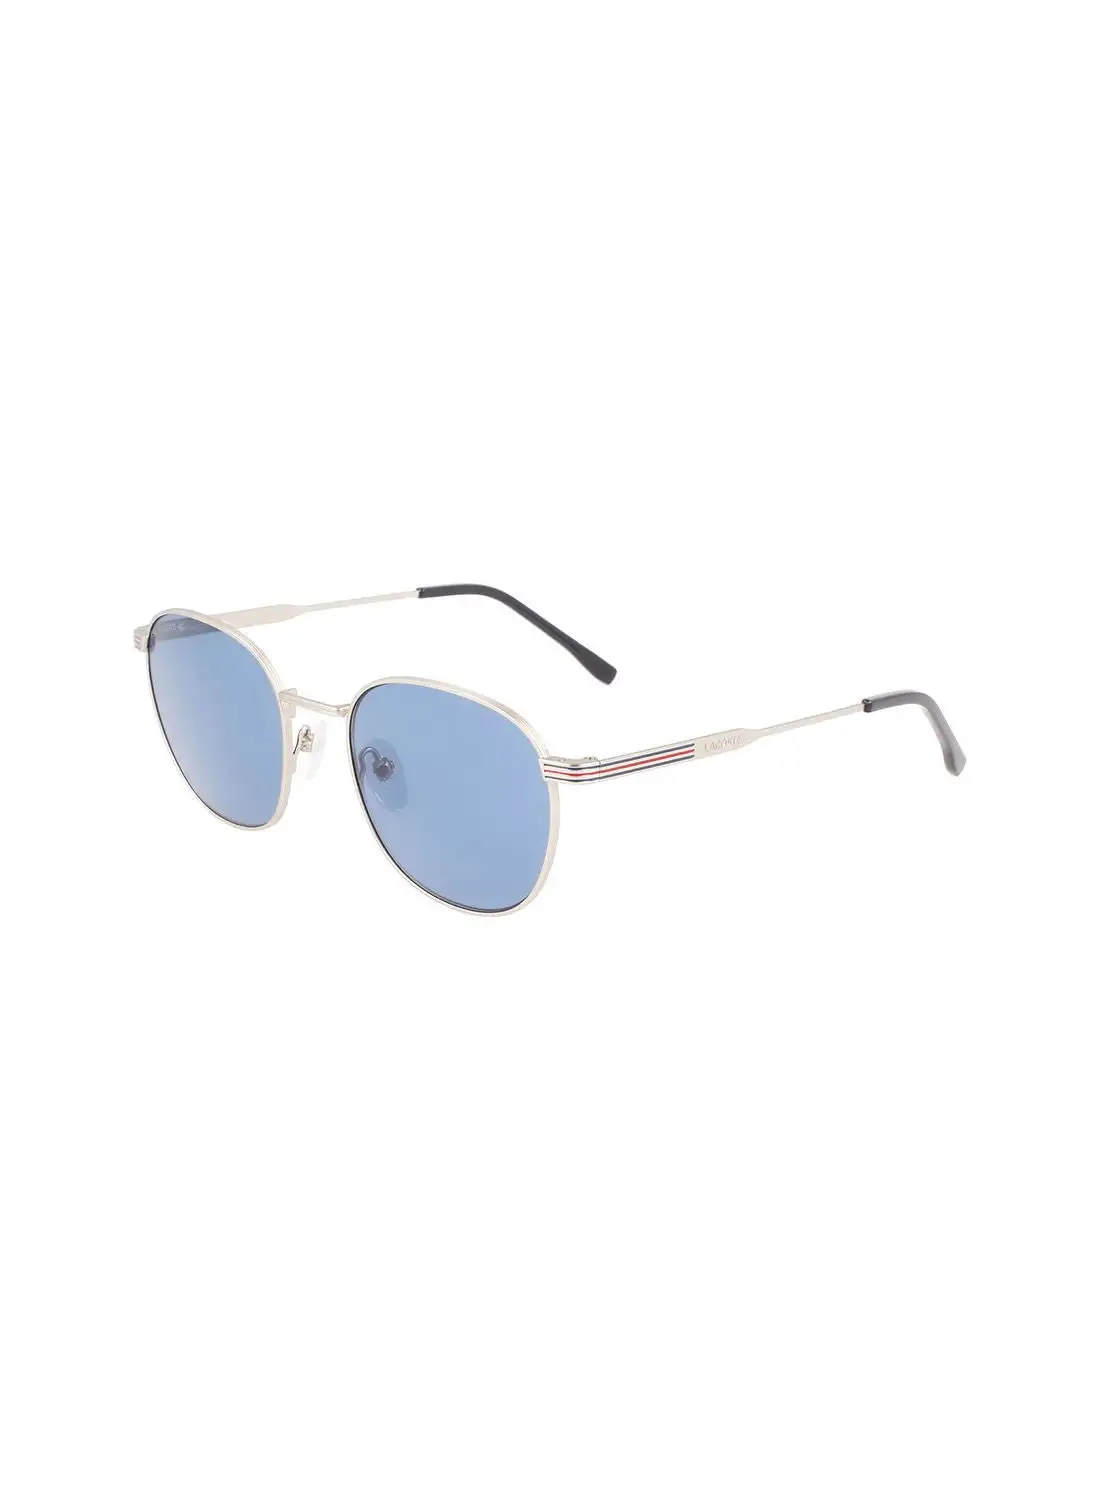 LACOSTE Full Rim Metal Oval Sunglasses L251S 5220 (012)